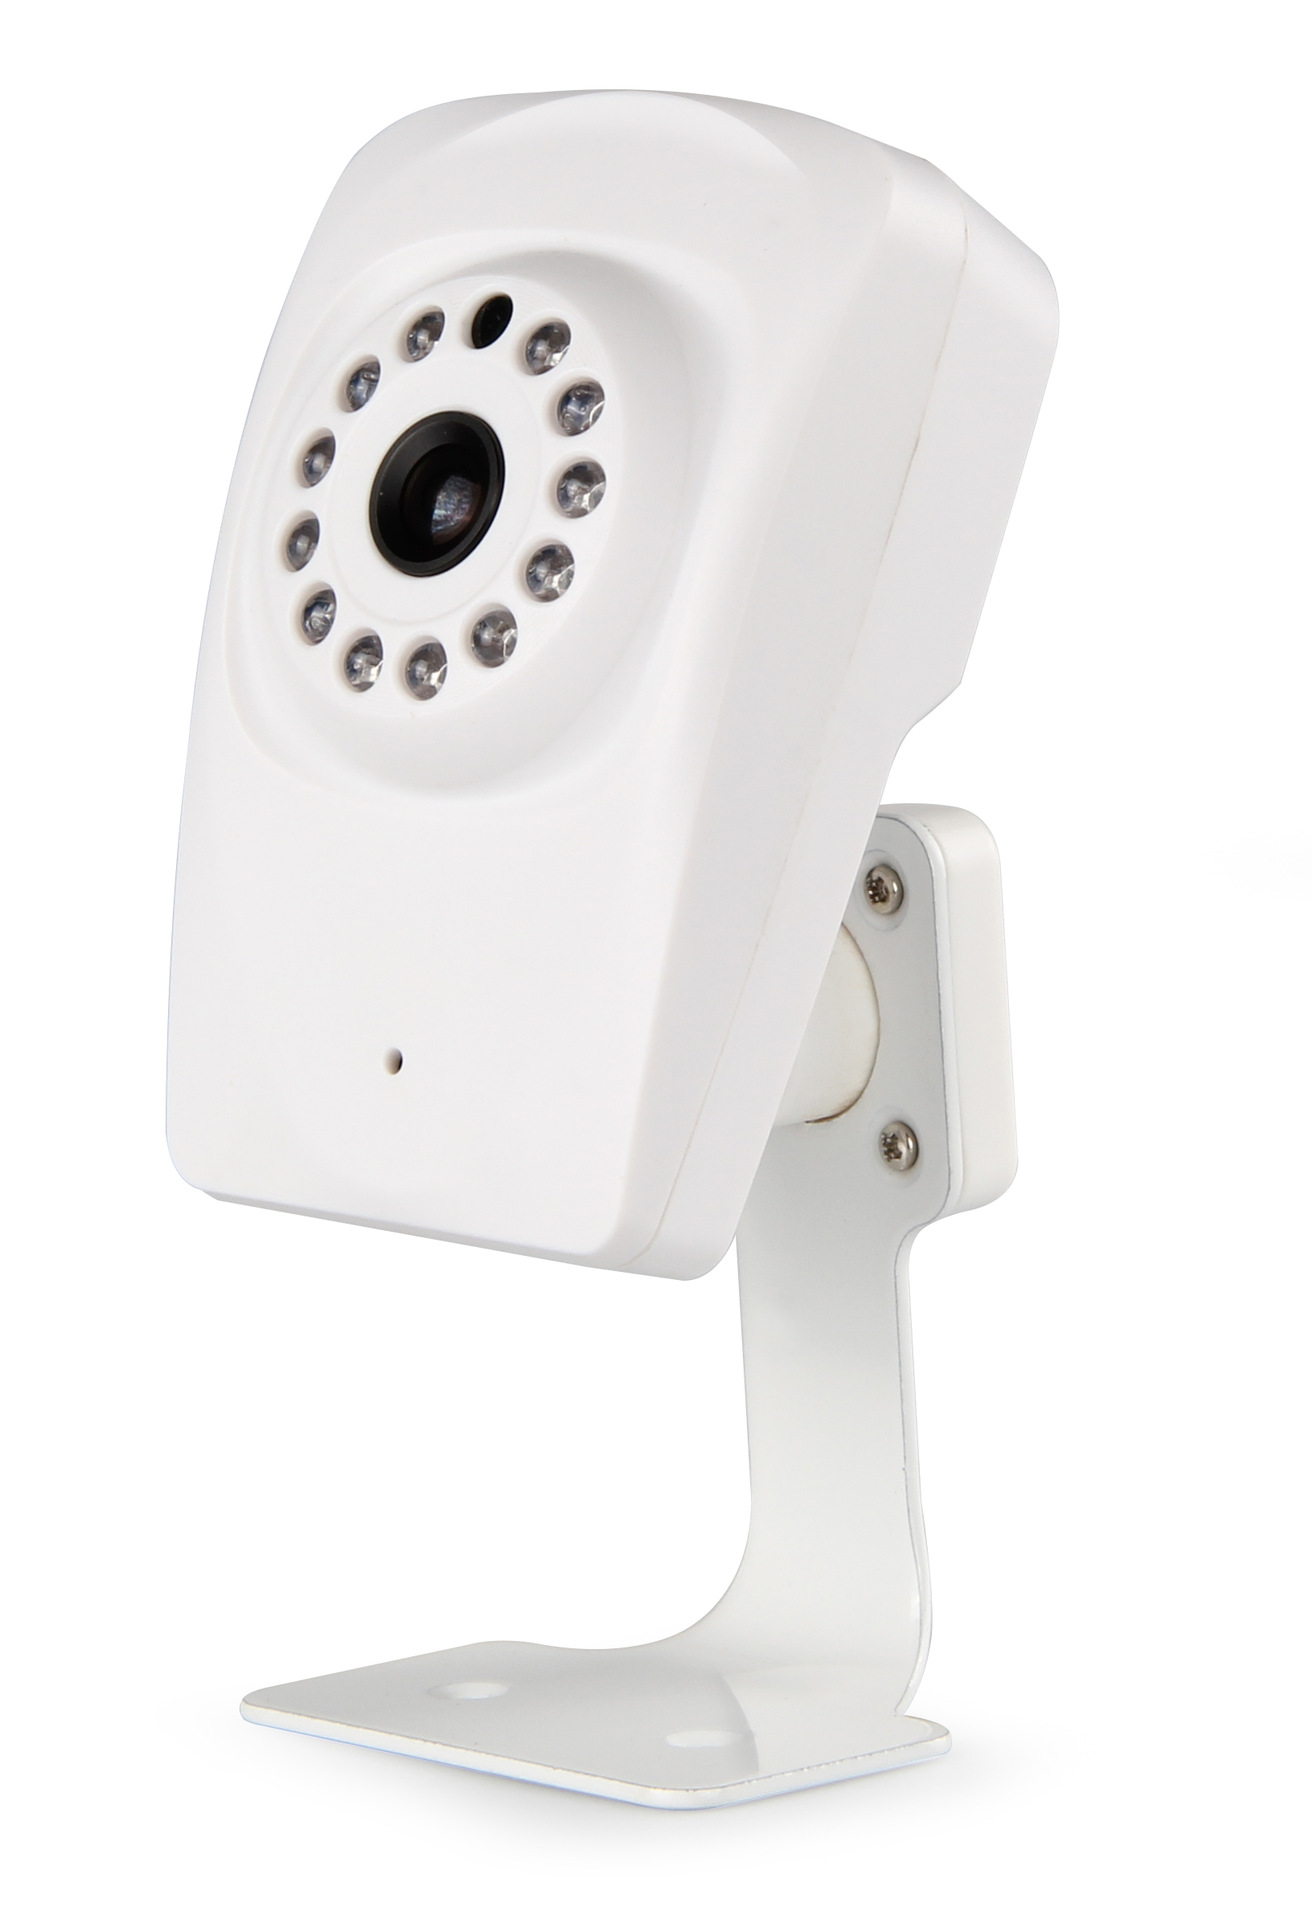 ip网络摄像机 远程监控摄像机 ipcamera 红外夜视网络摄像头